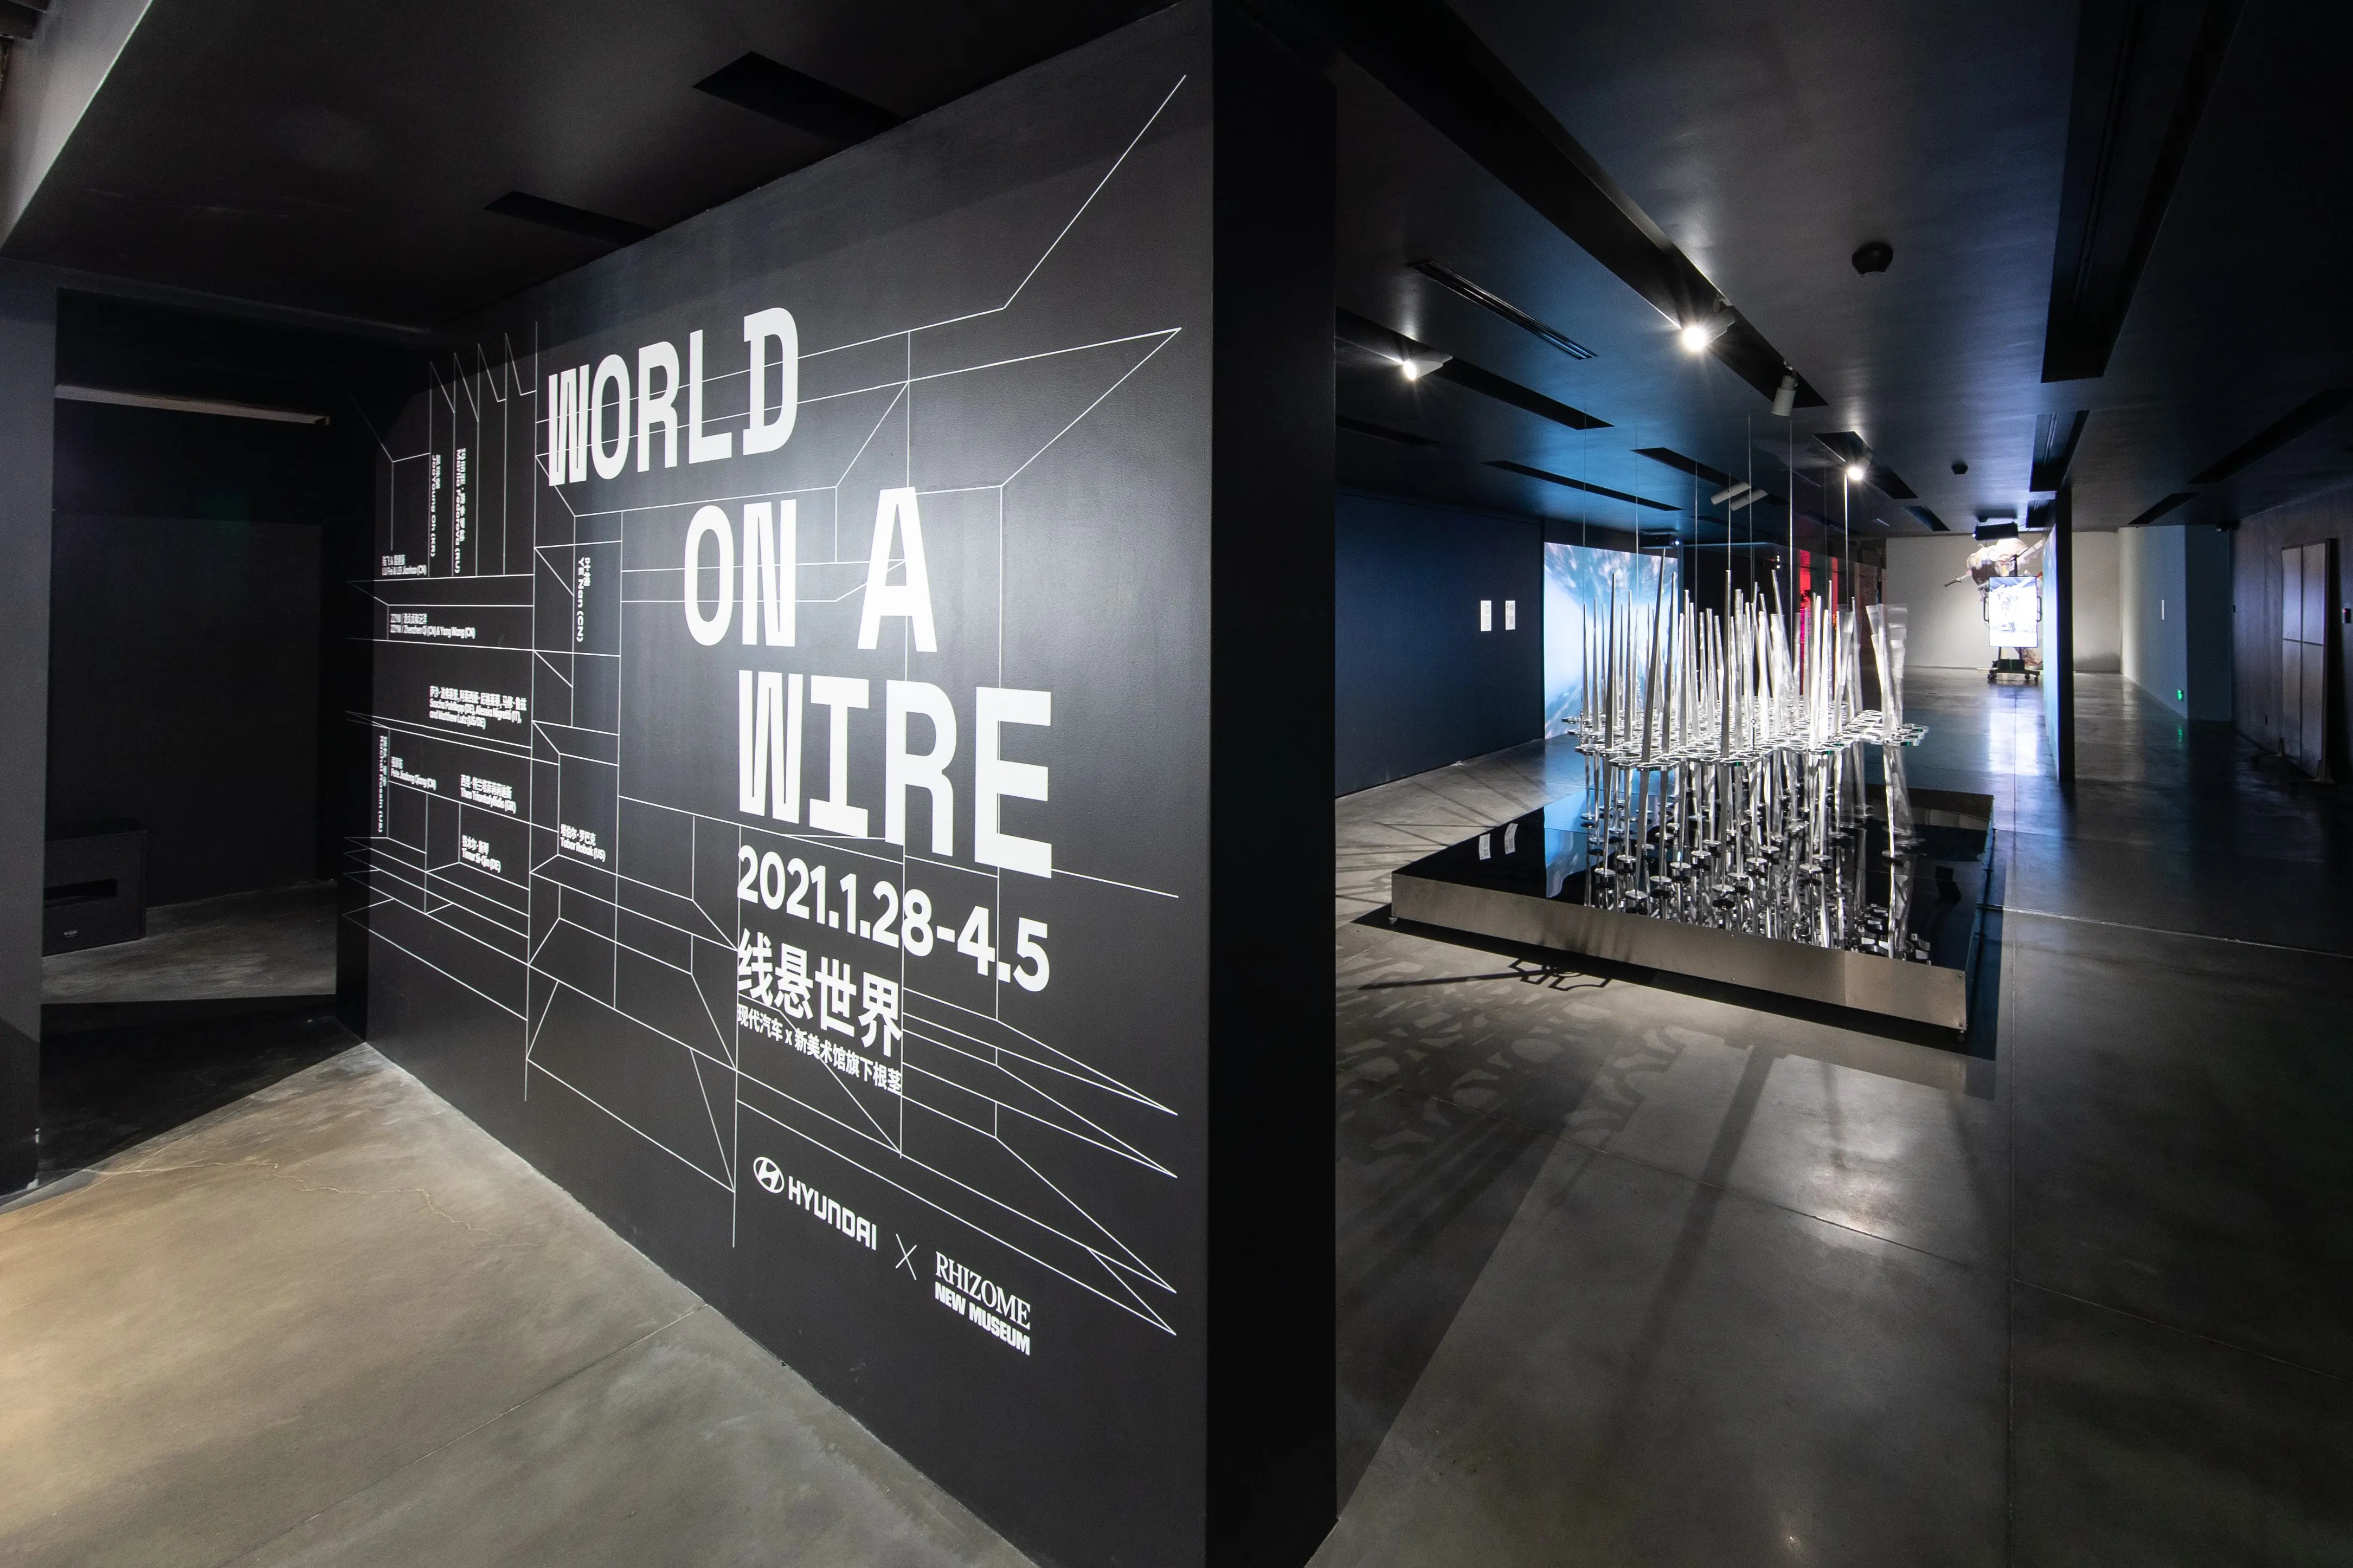  Installation view of World on a Wire in BeijingHyundai Motorstudio Beijing